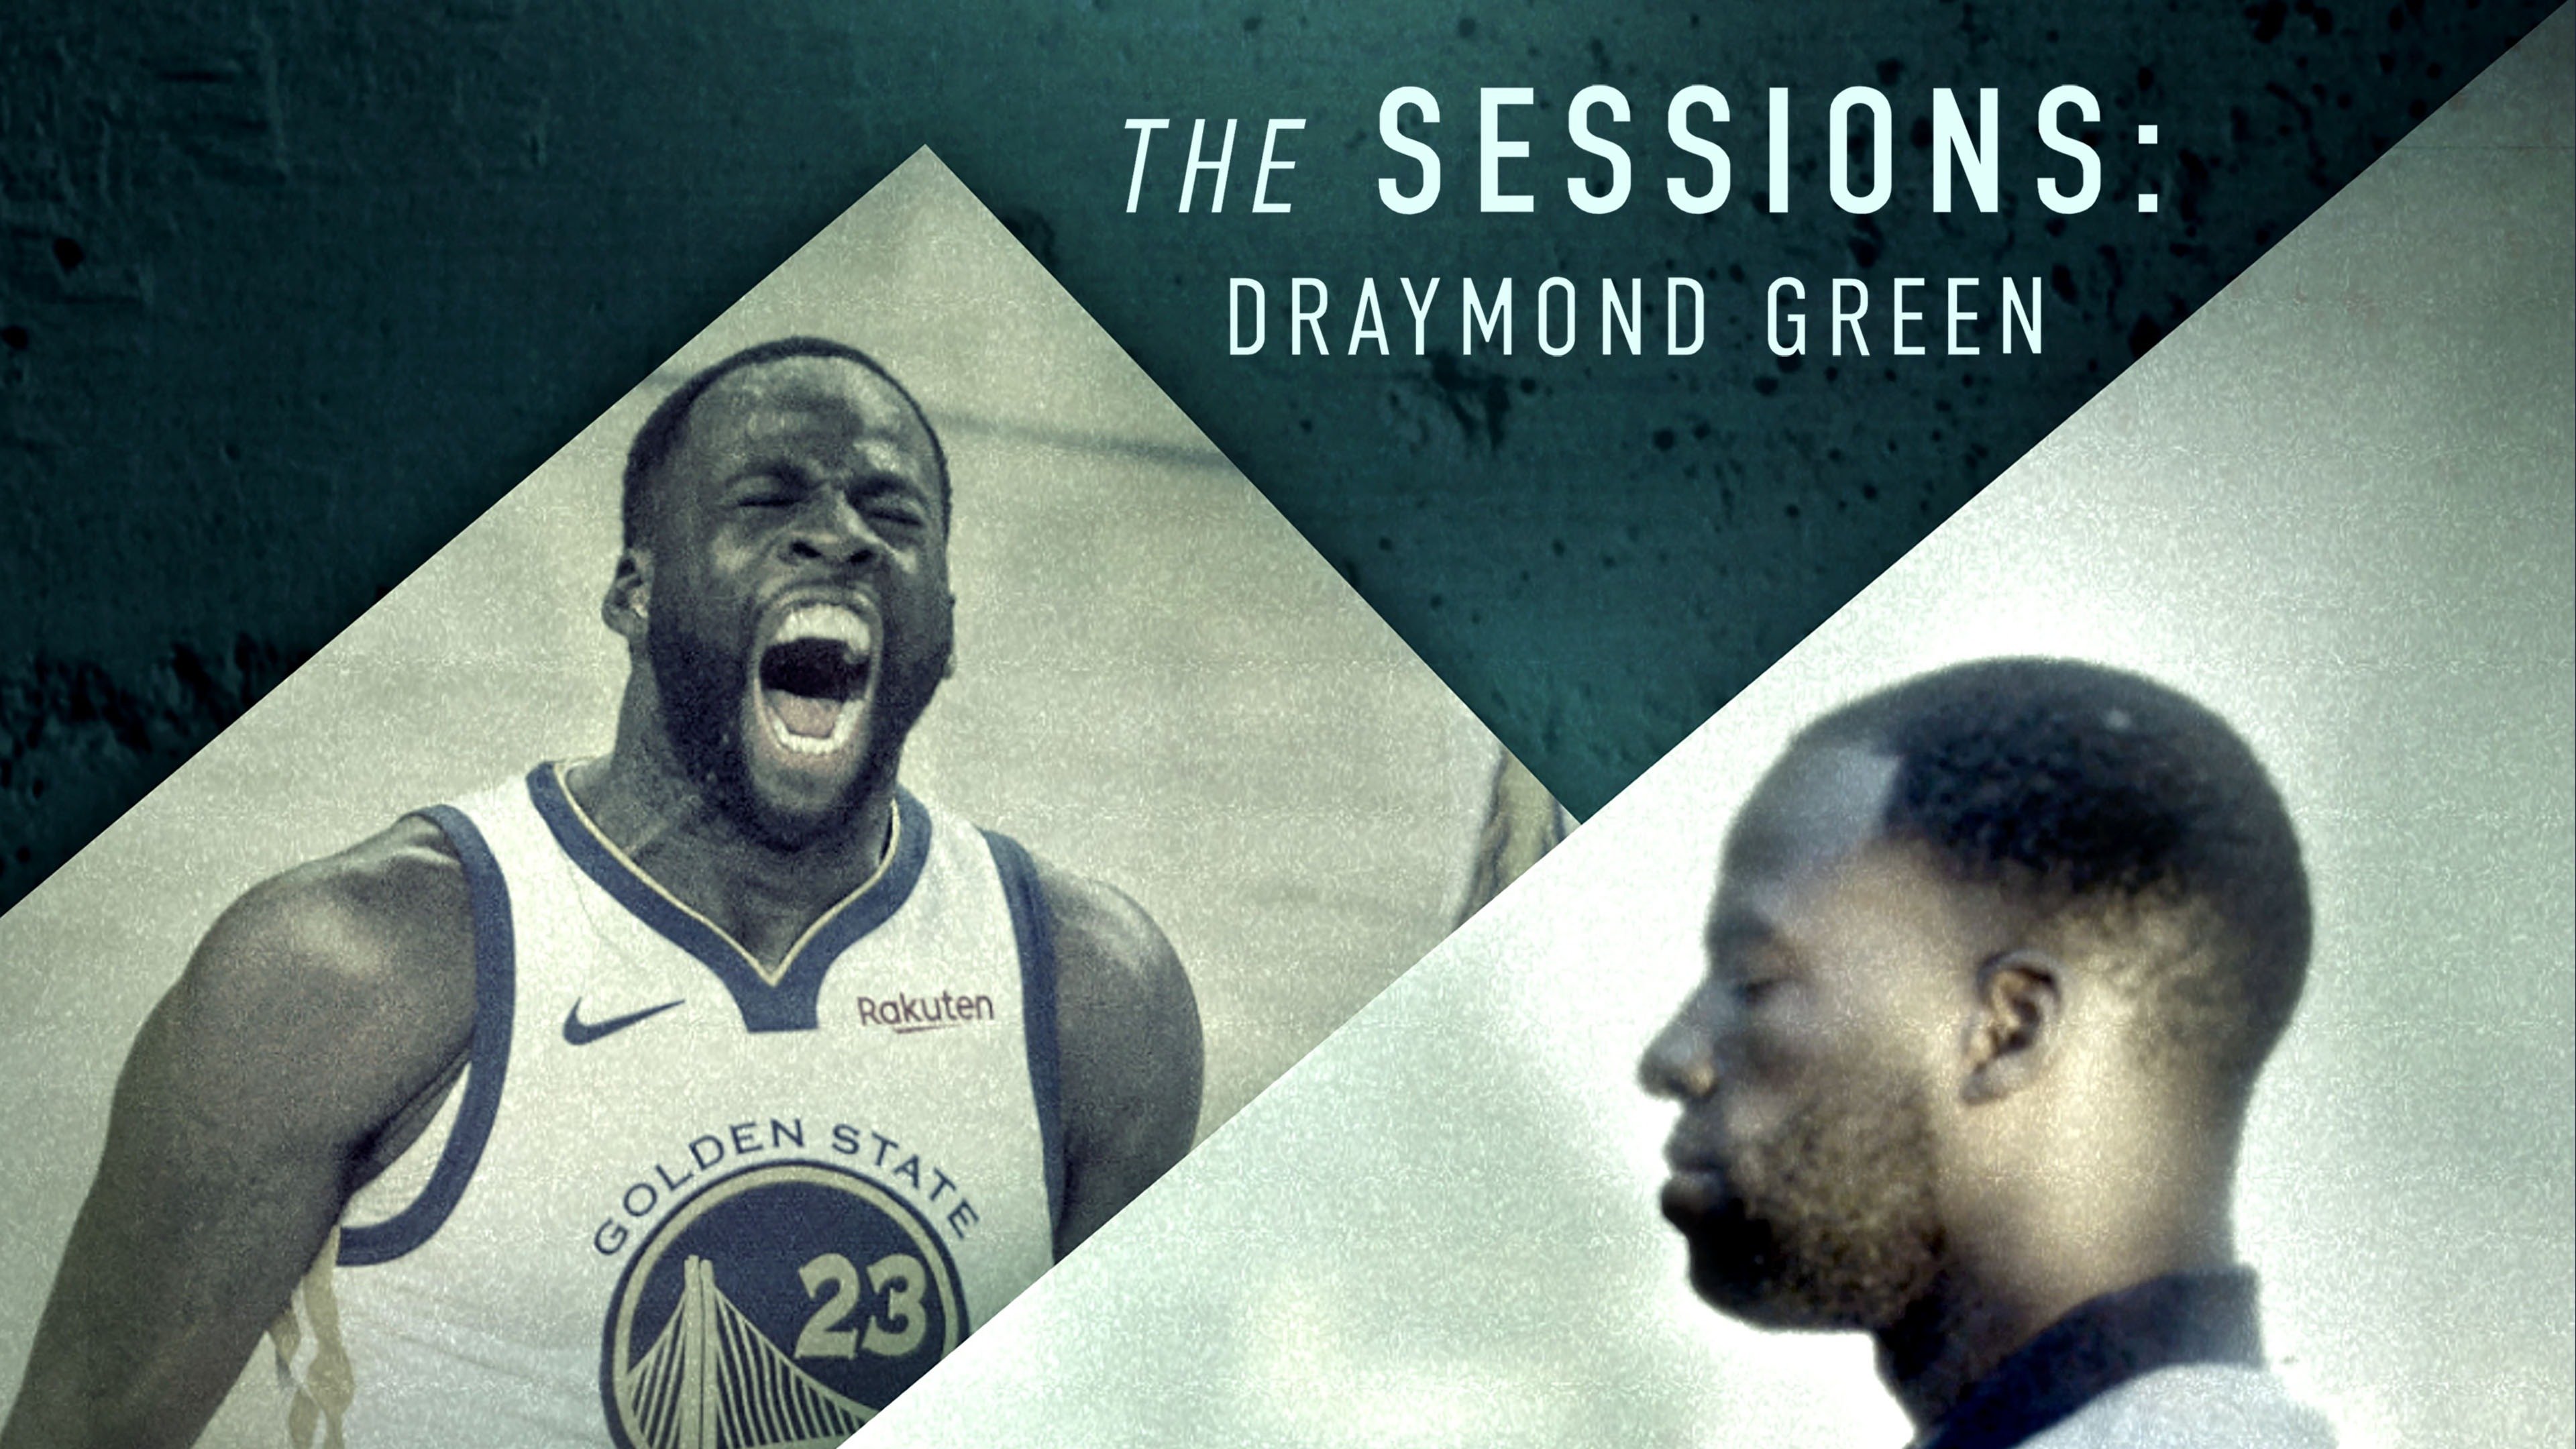 The Sessions Draymond Green - Amazon Prime Video Docuseries